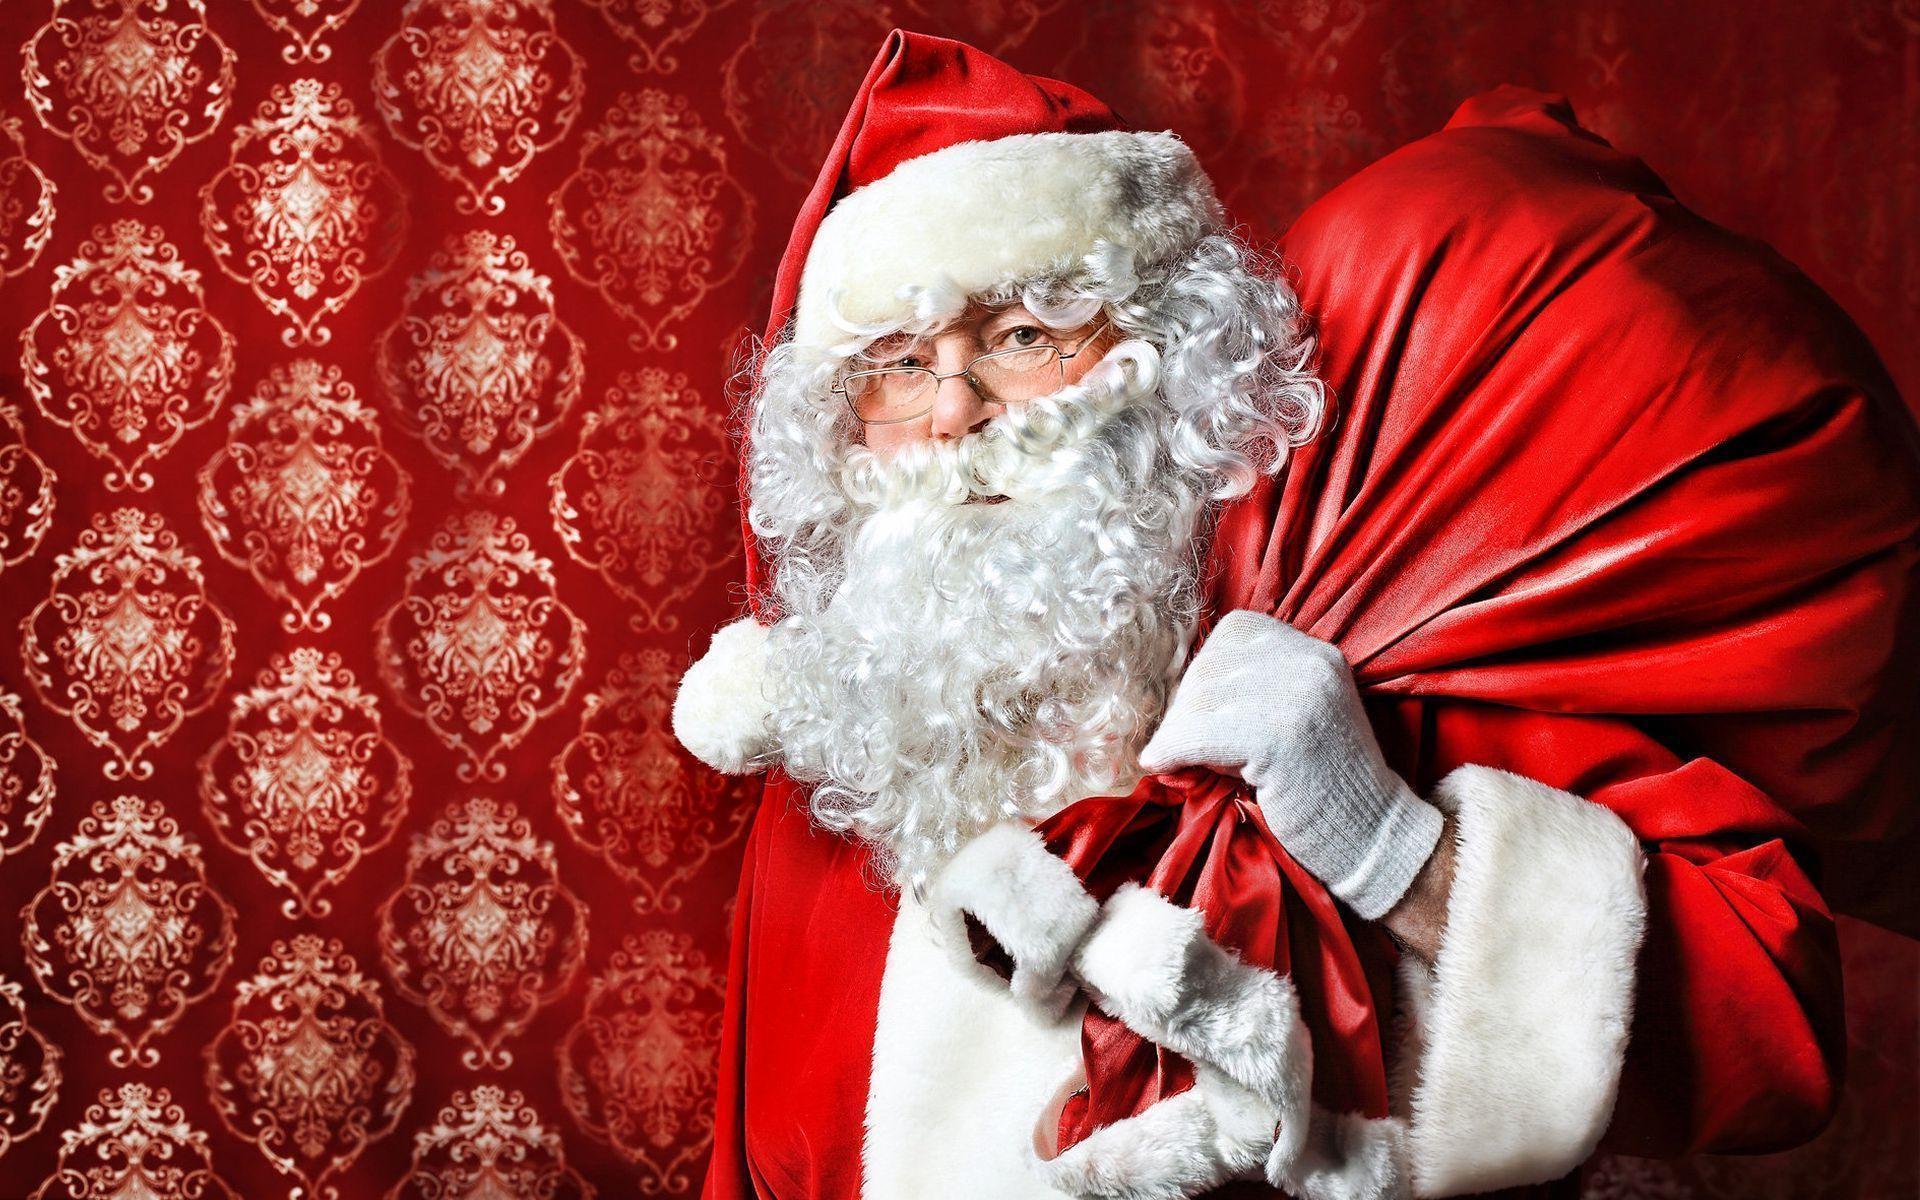 Download wallpaper: Santa Claus, download desktop wallpaper